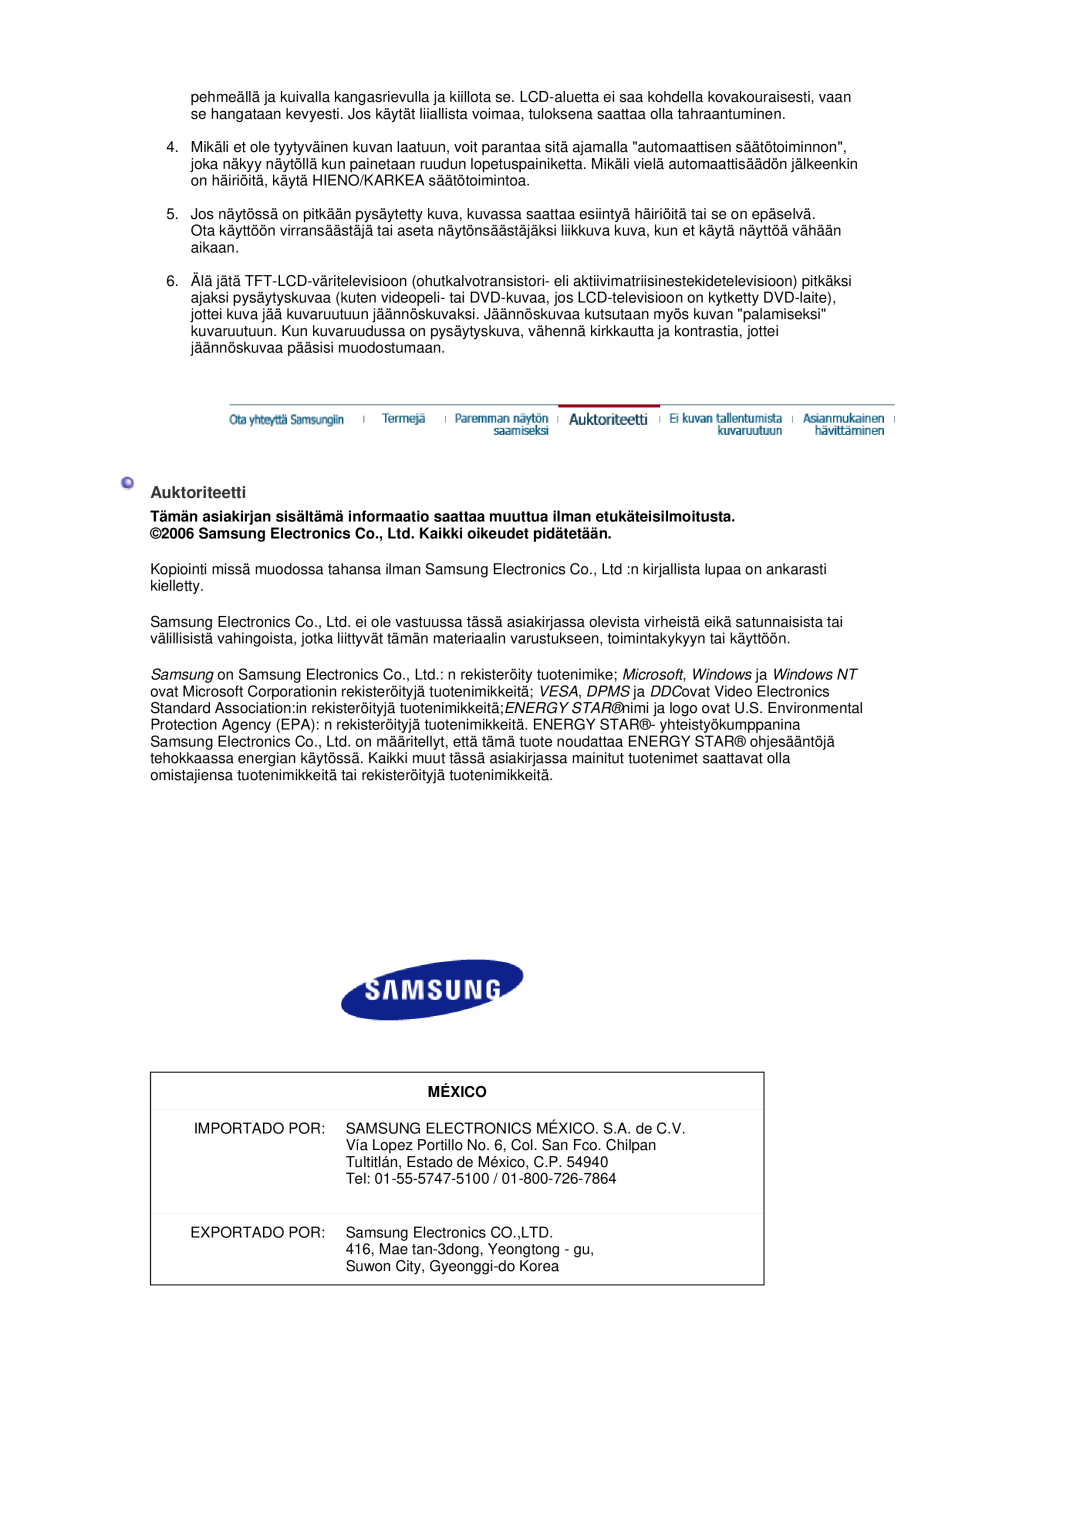 Samsung LS19DOASS/EDC, LS17DOASS/EDC manual Auktoriteetti, México 